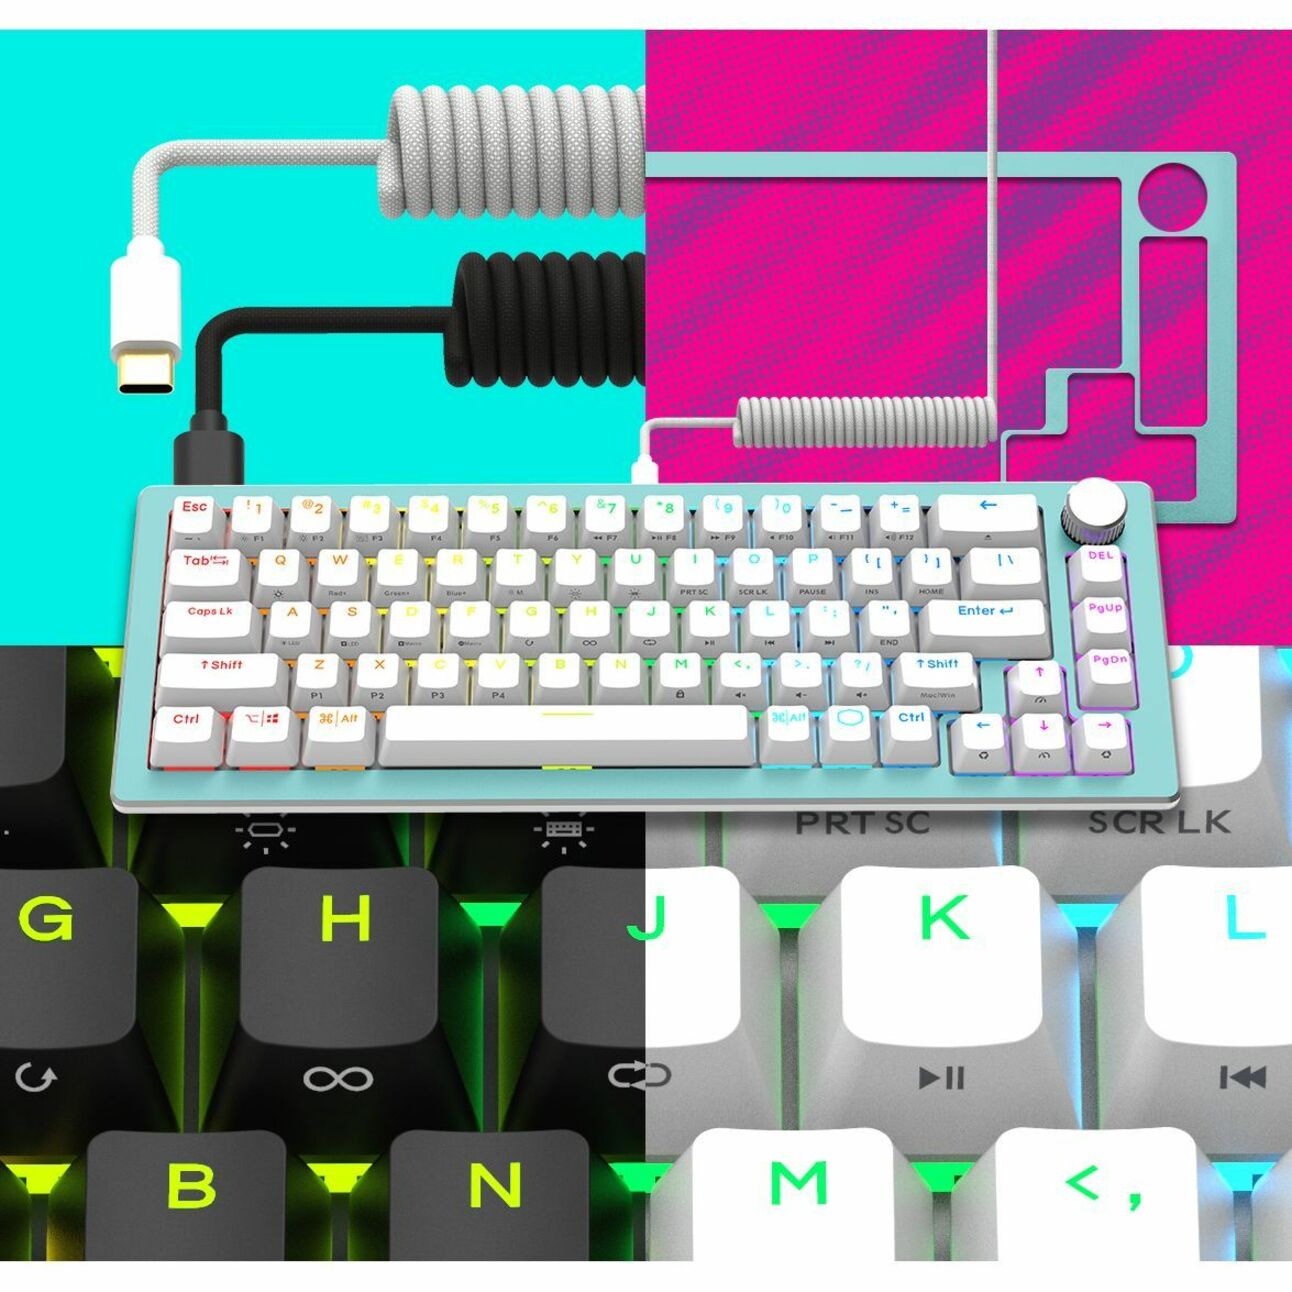 Cooler Master CK-720-GKKM1-US CK720 65% Gaming Keyboard, RGB LED Backlight, Mechanical/MX Keyswitch Technology